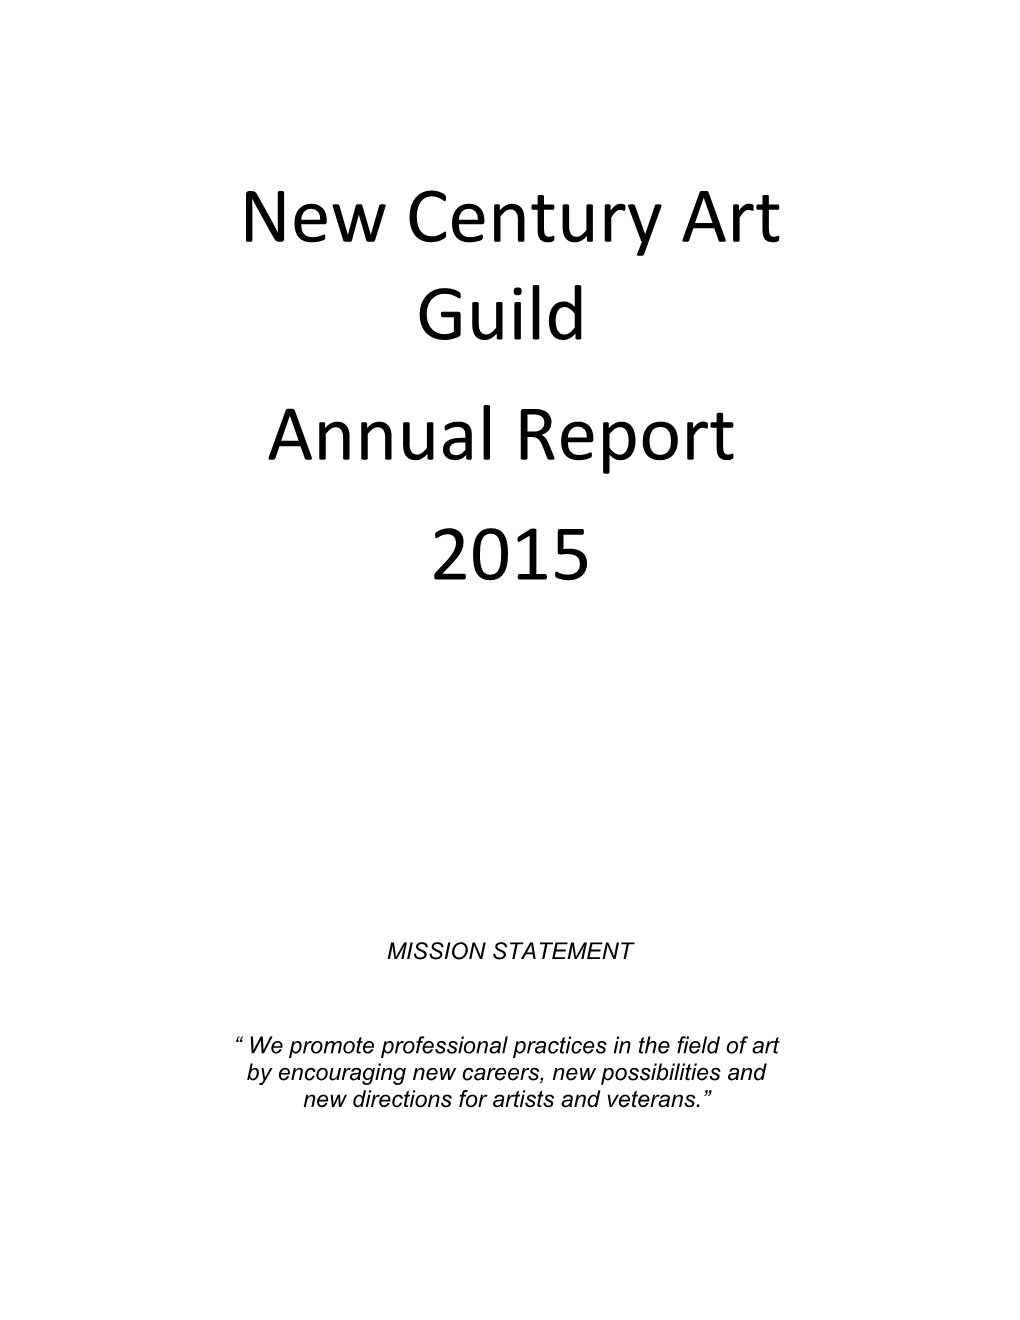 New Century Art Guild